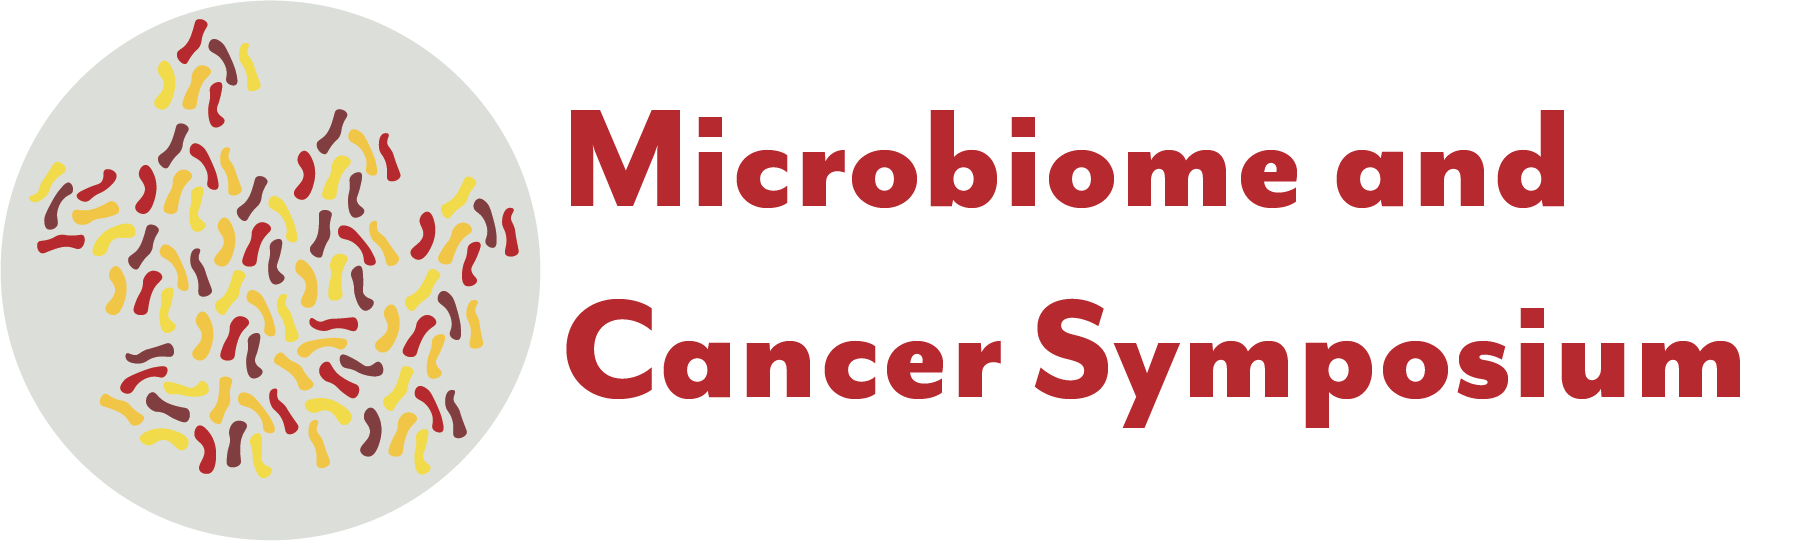 Microbiome and Cancer Symposium